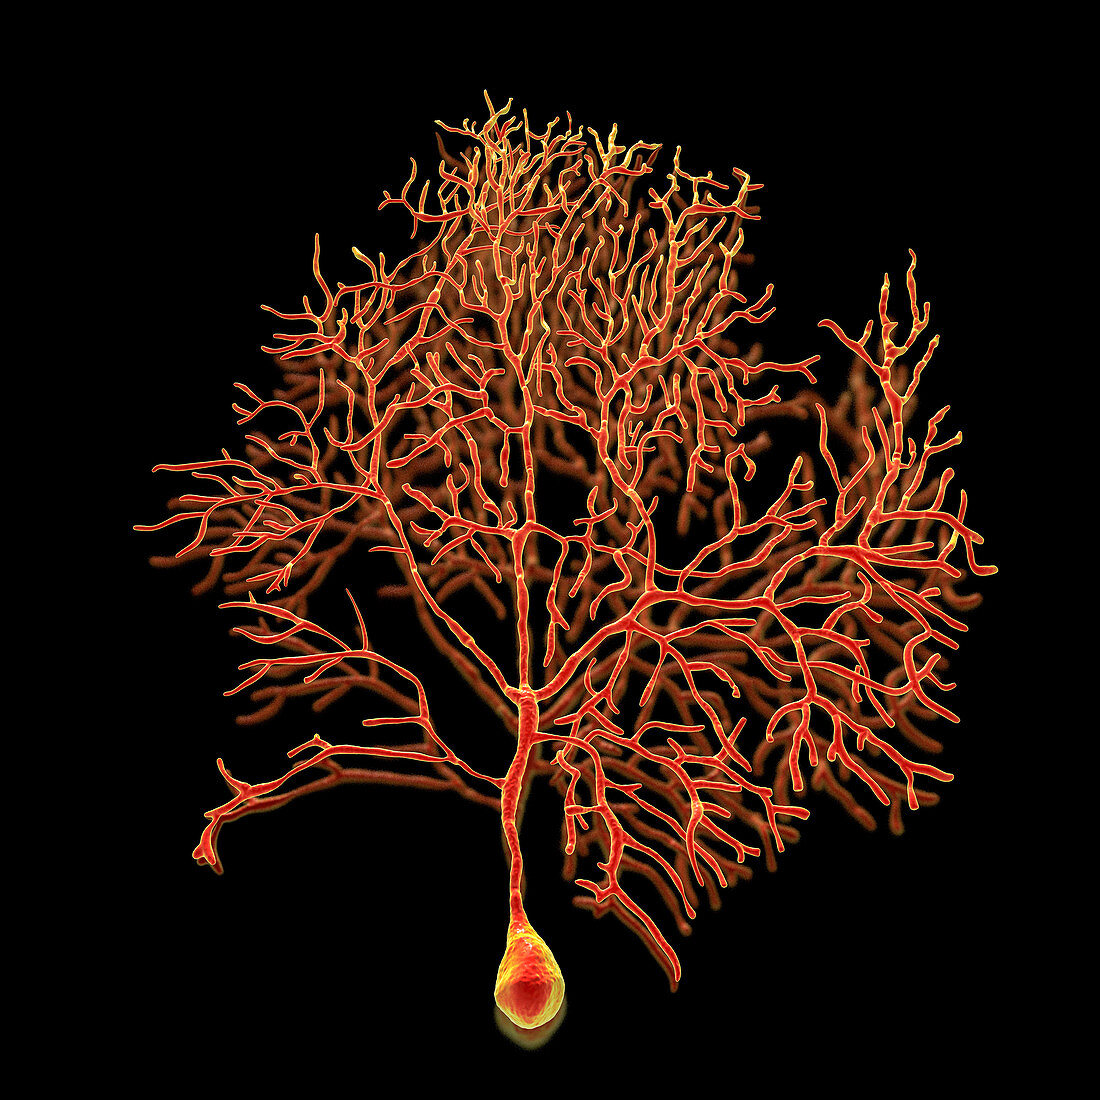 Purkinje nerve cell of the cerebellum, illustration